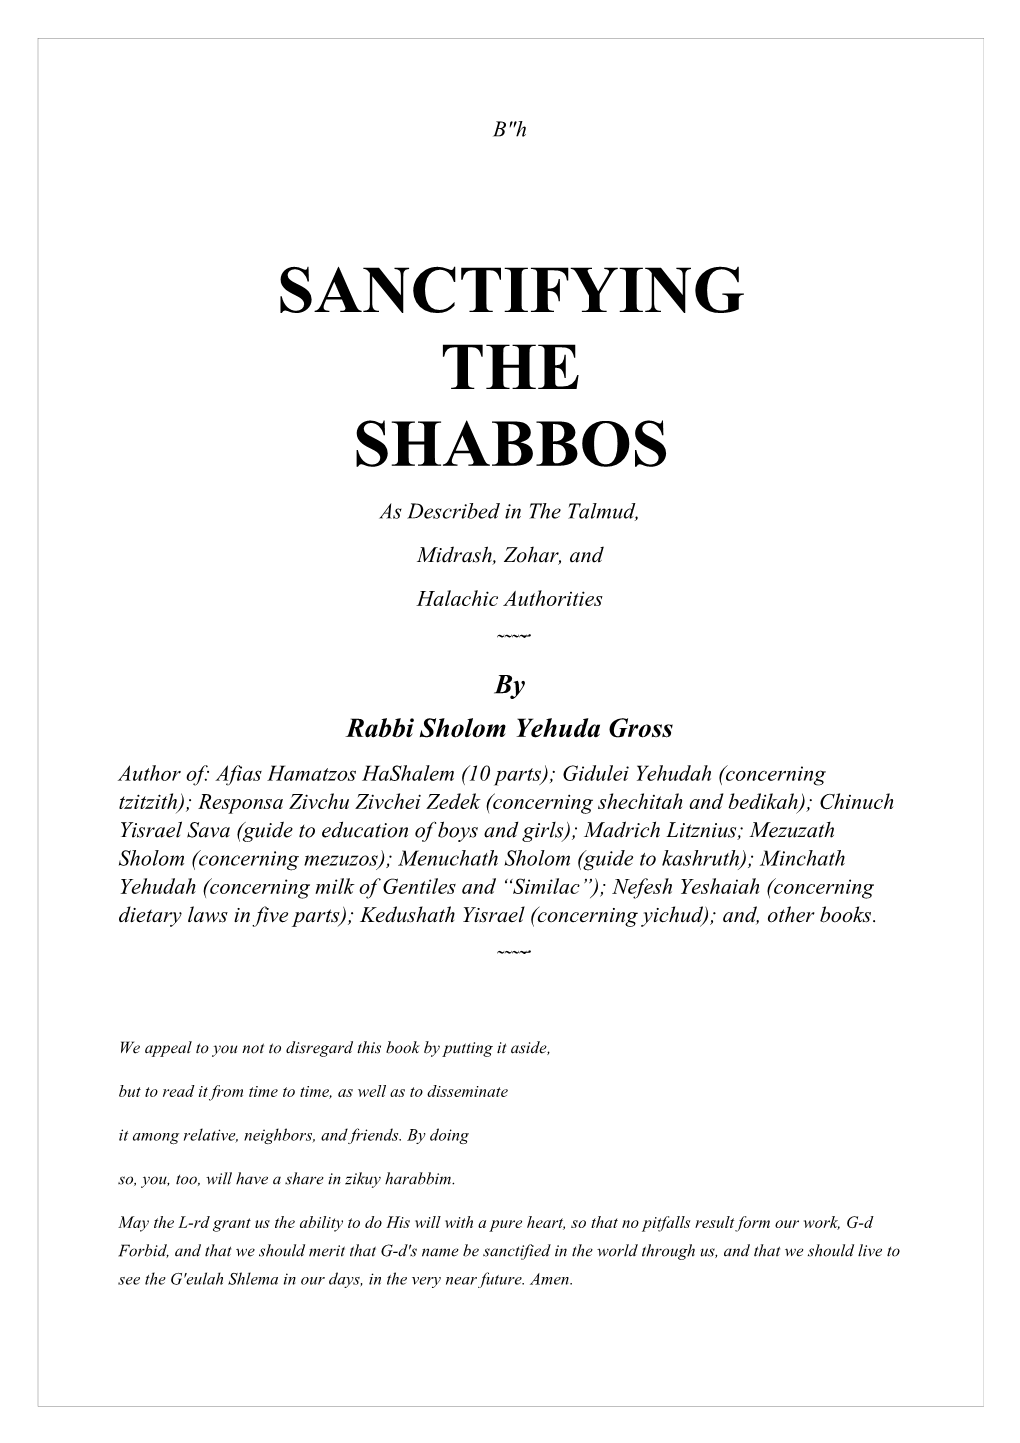 Sanctifying the Shabbos